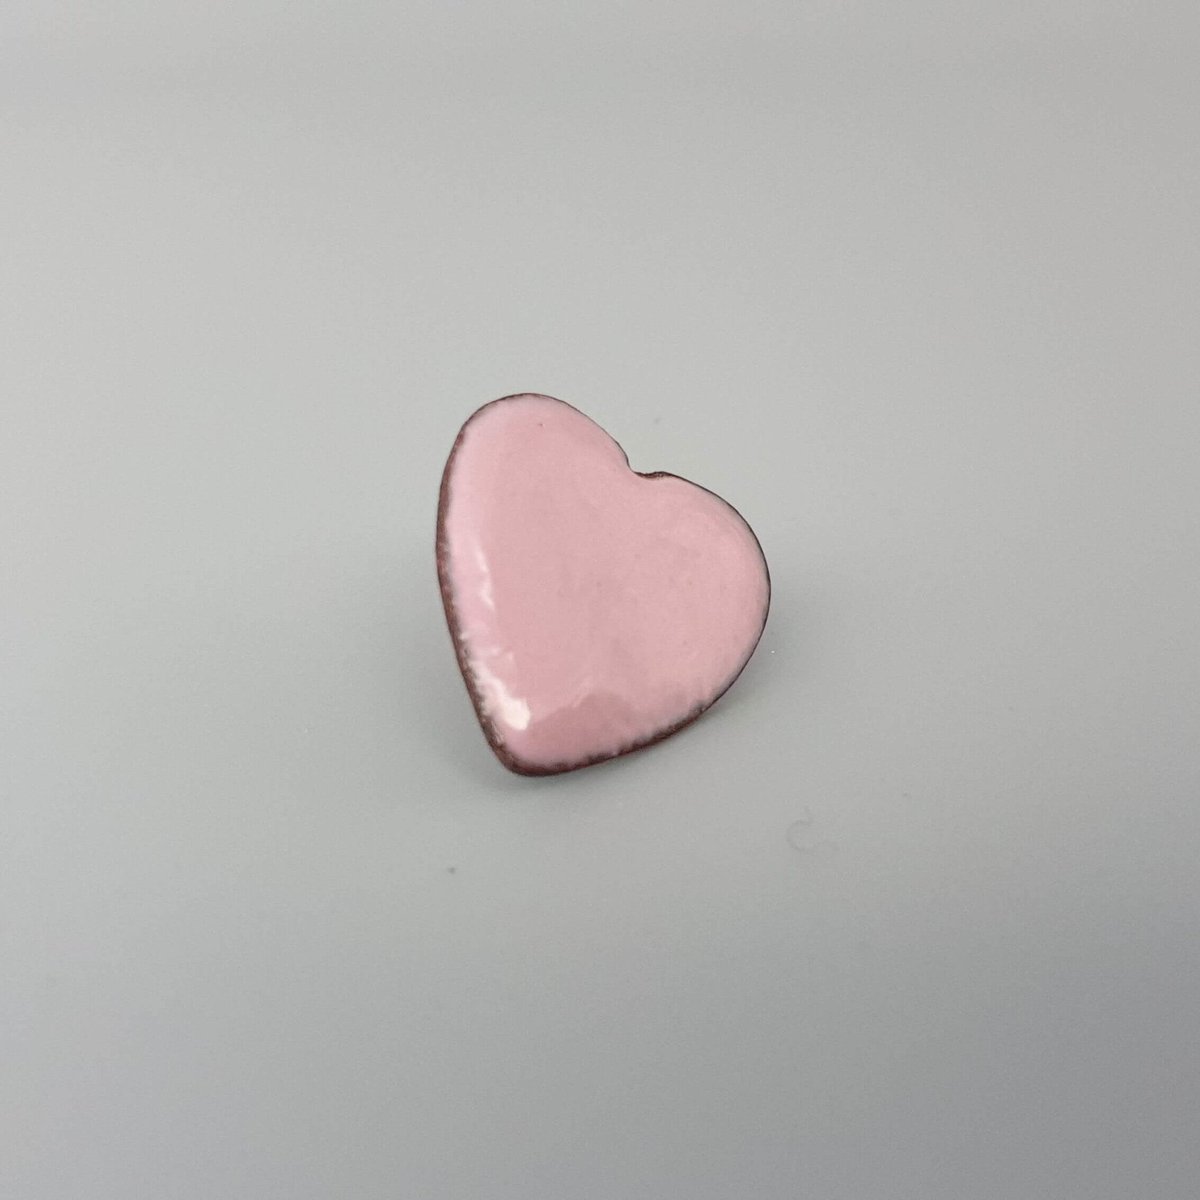 Enamel Heart Brooch tuppu.net/657e8f02 #giftideas #HandmadeHour #shopsmall #inbizhour ##UKGiftHour #MHHSBD #UKHashtags #bizbubble #Valentines